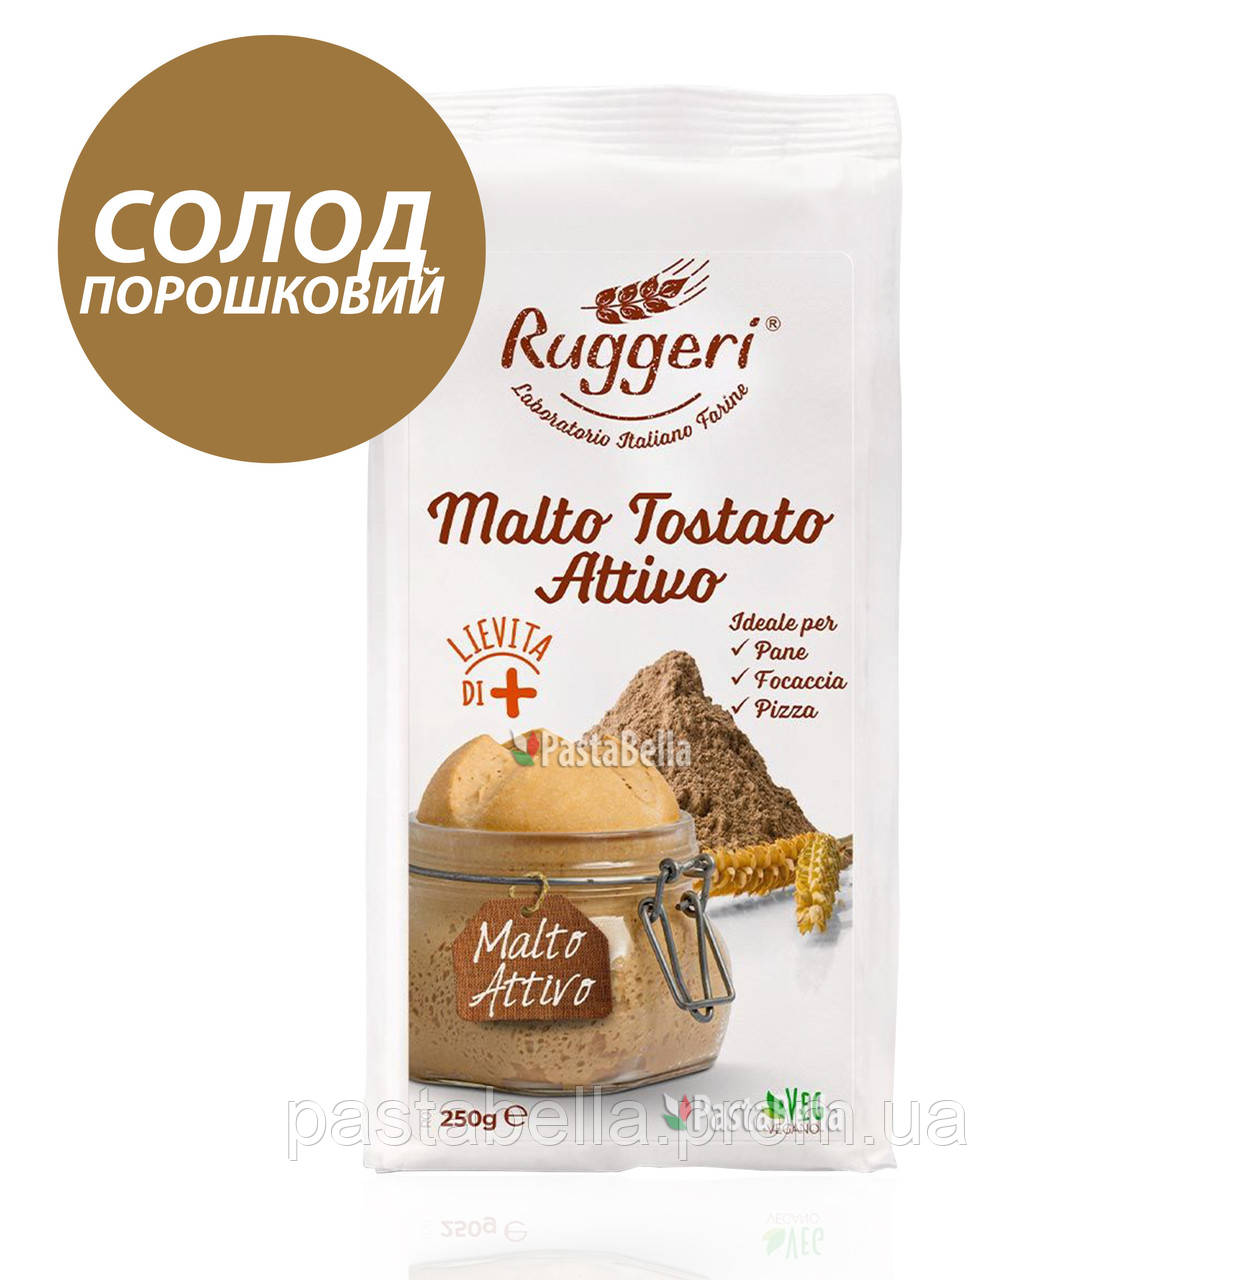 Італійський сухий солод "Мальто" 250g - Ruggeri "Malto Tostato Attivo"